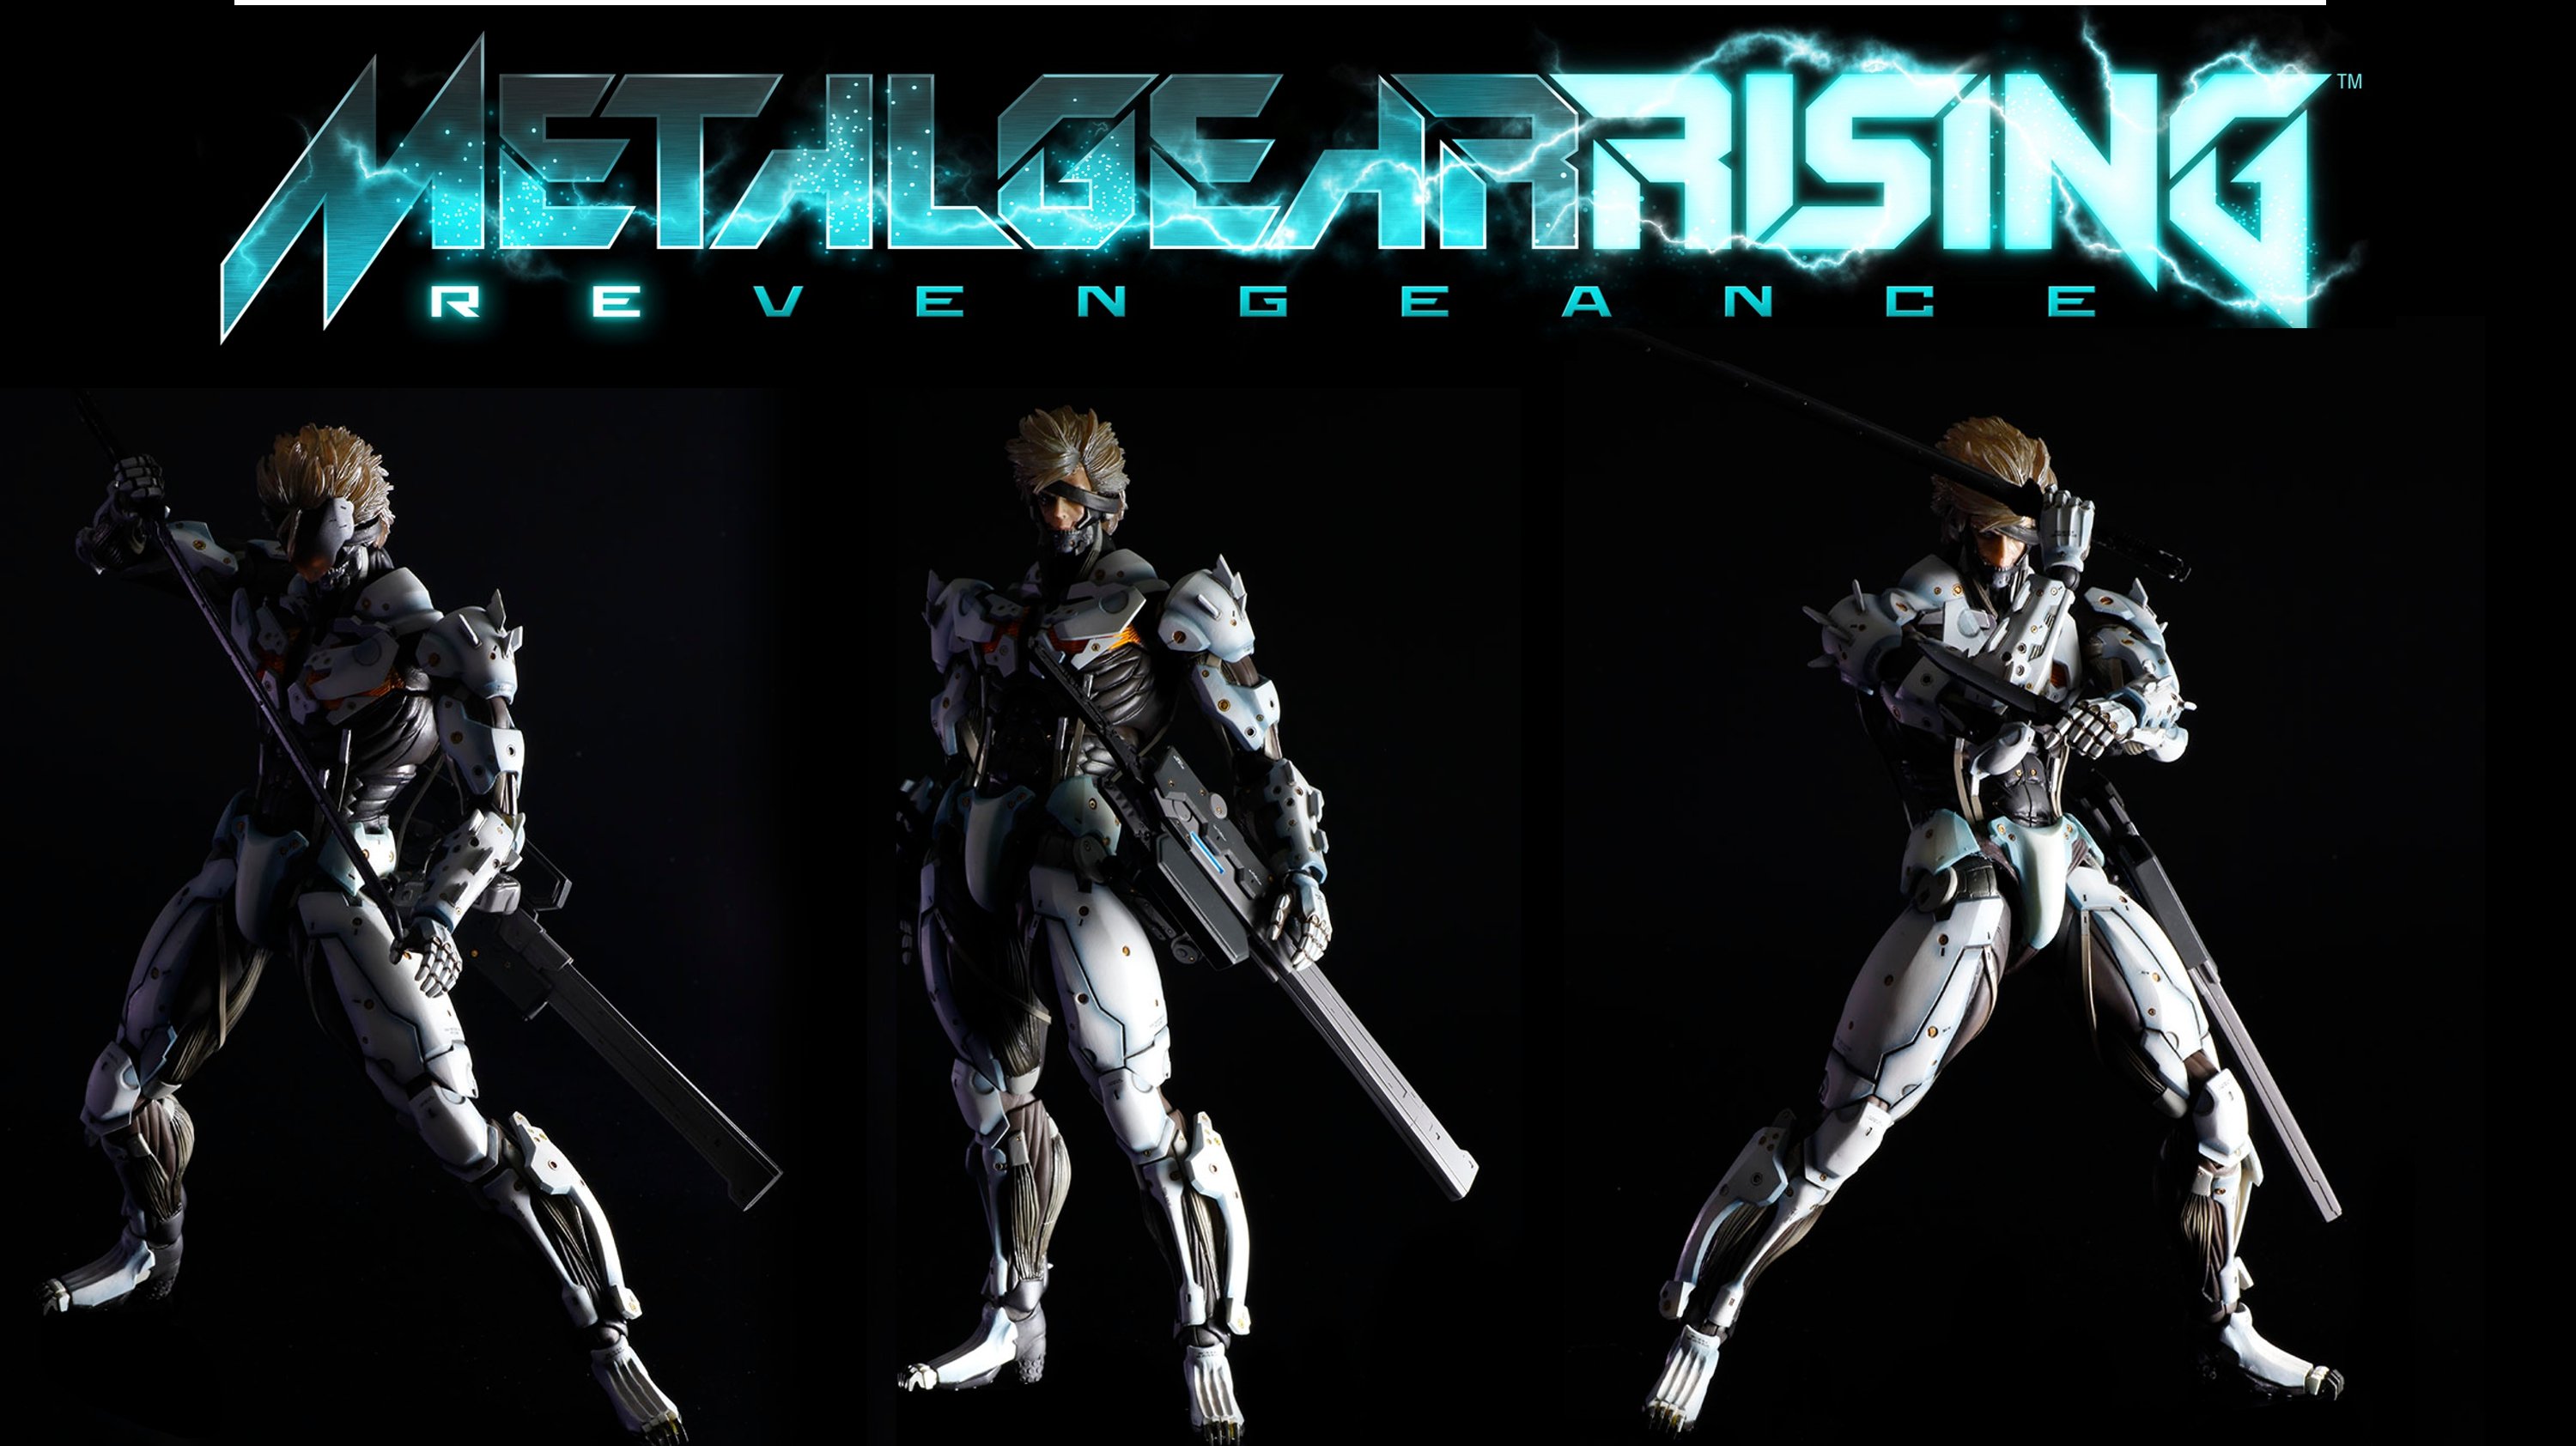 metal, Gear, Rising, Revengeance, Fighting, Cyborg, Robot, Warrior, Sci fi, 1mgrr, Action, Futuristic, Sword, Poster Wallpaper